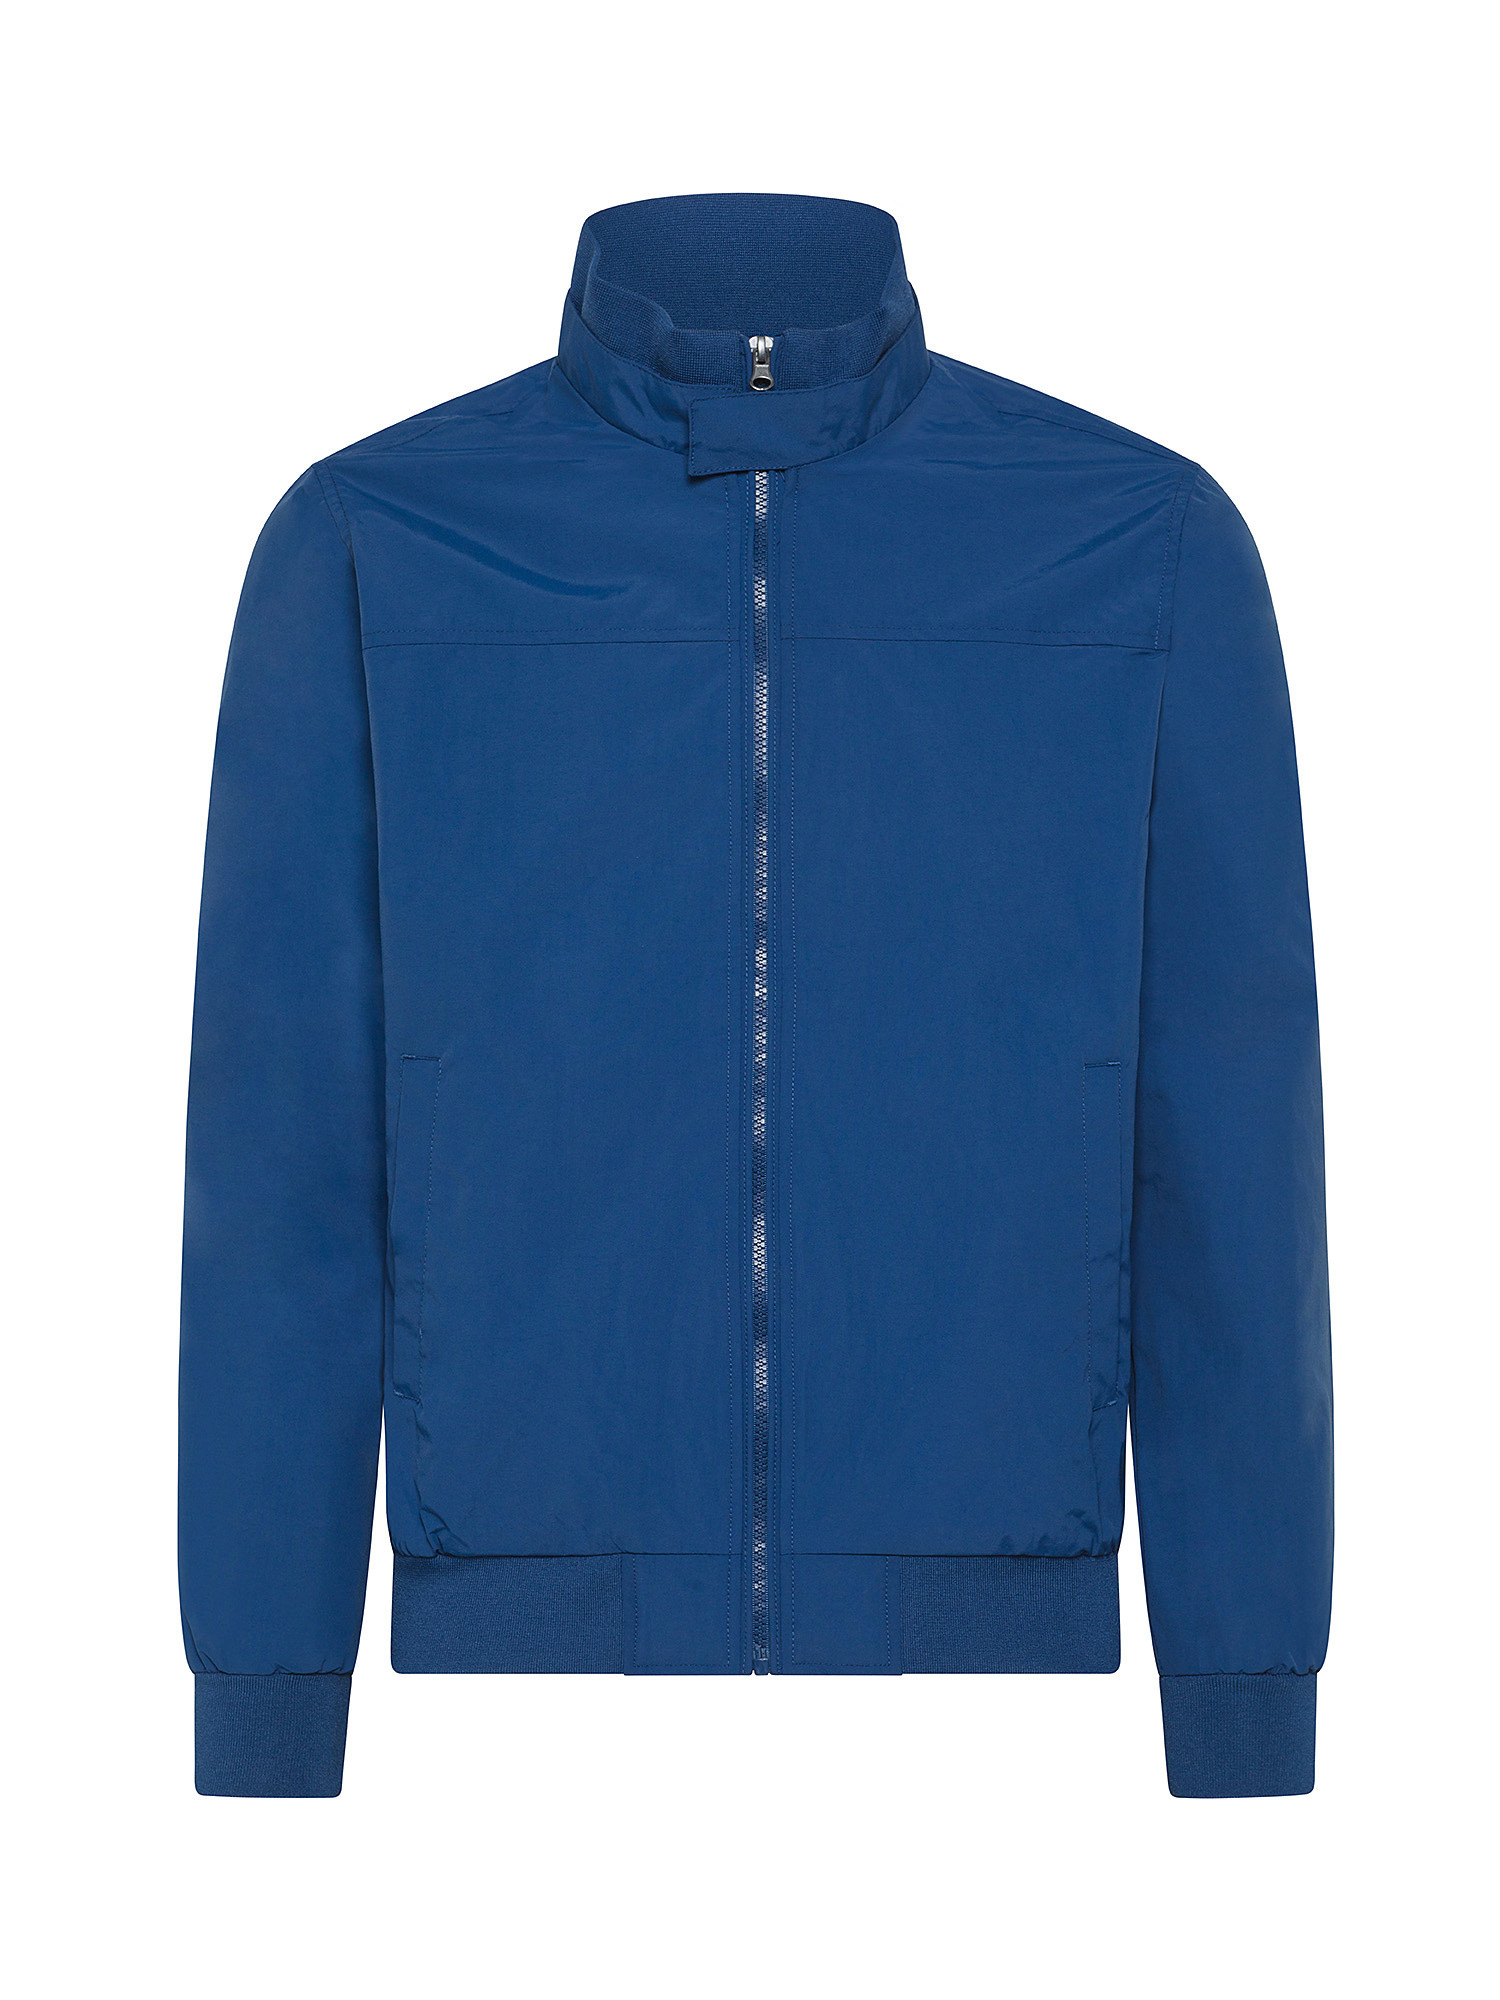 JCT - Full zip jacket, Royal Blue, large image number 0